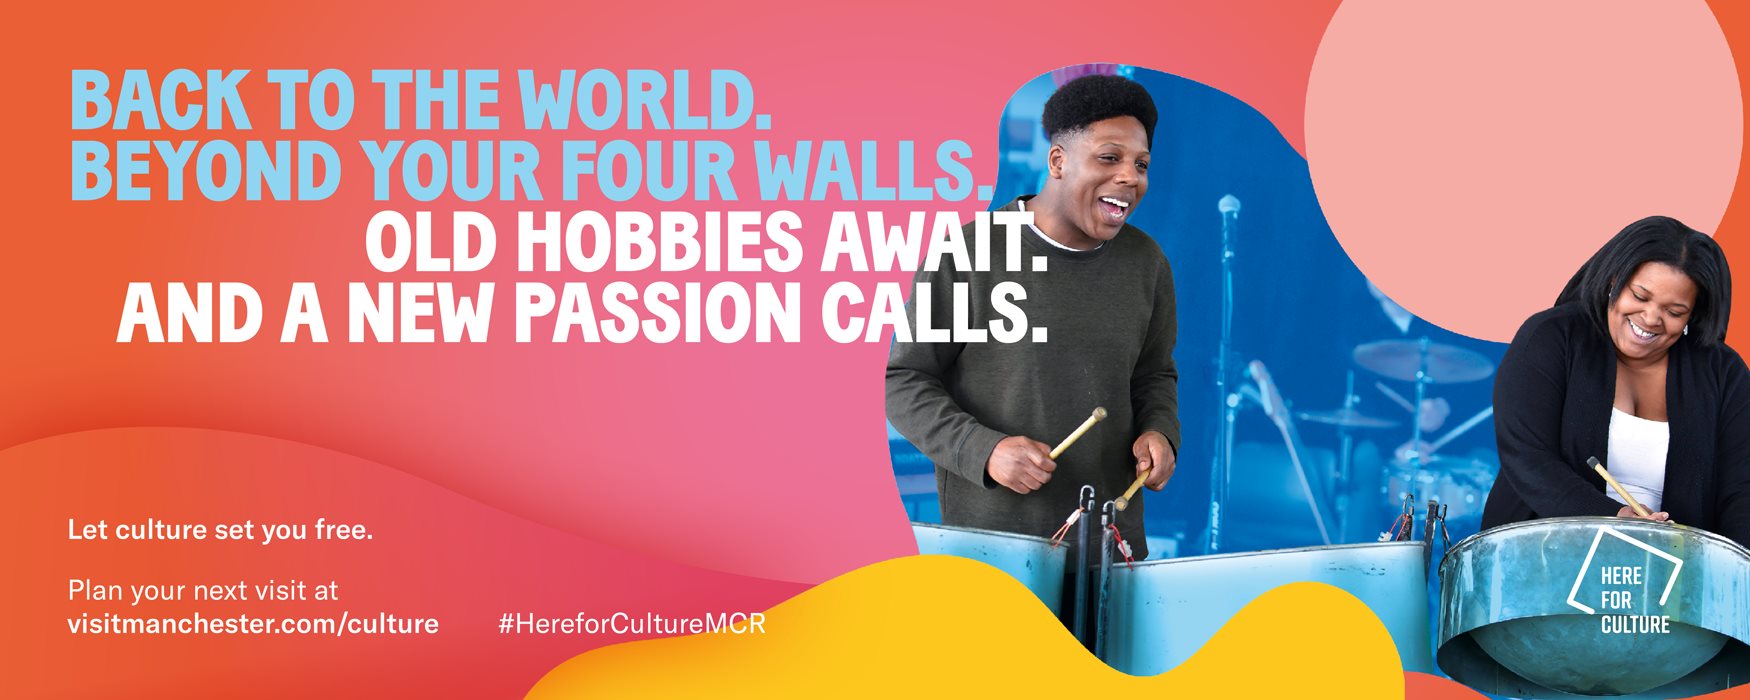 Manchester culture campaign artwork